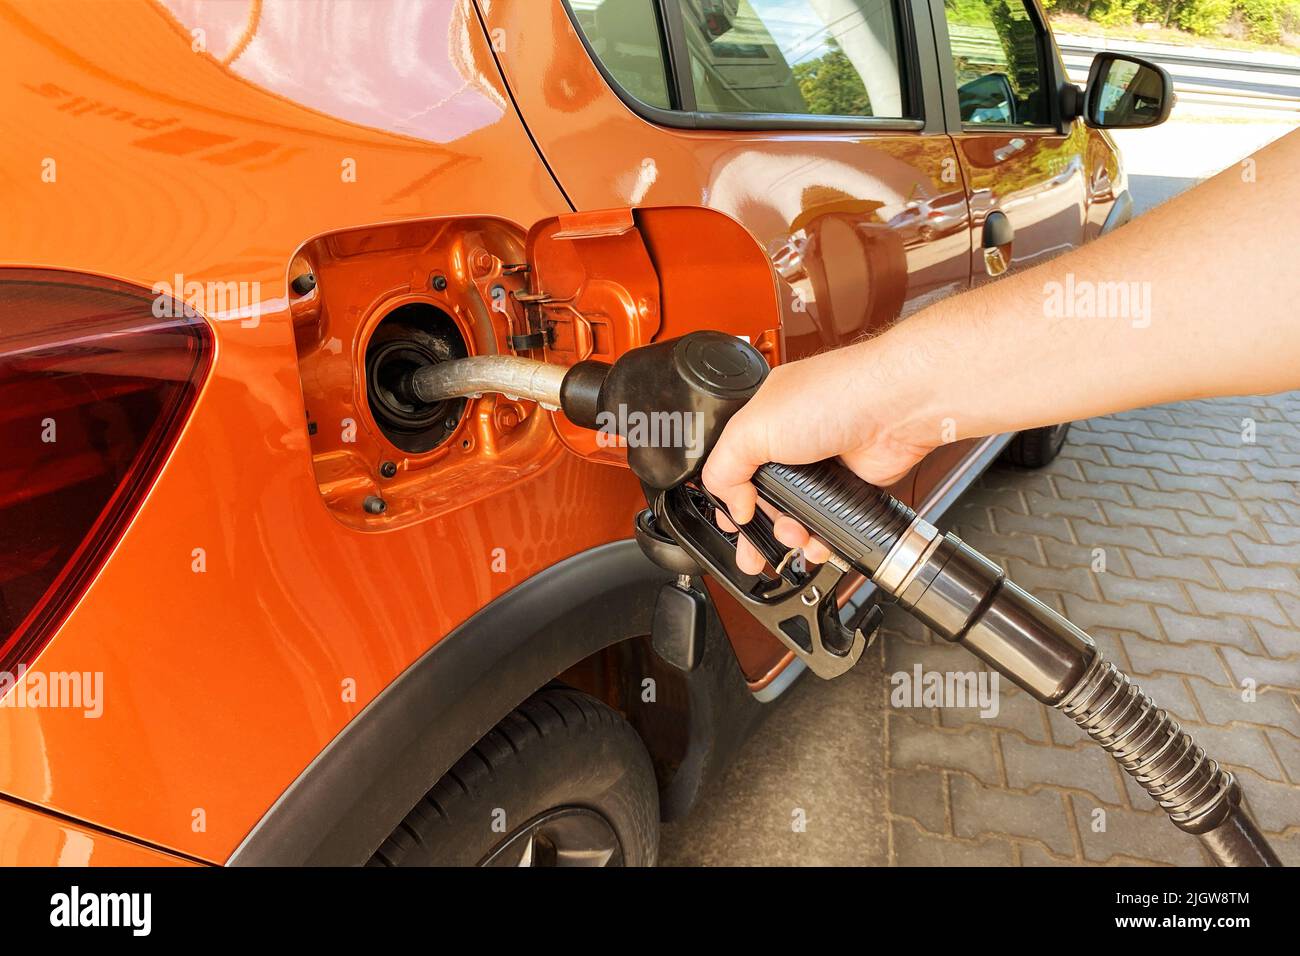 Petrol station pump. Pumping gasoline fuel in orange car at a gas station. Fill orange car with fuel in petrol station. Sunlight. Stock Photo